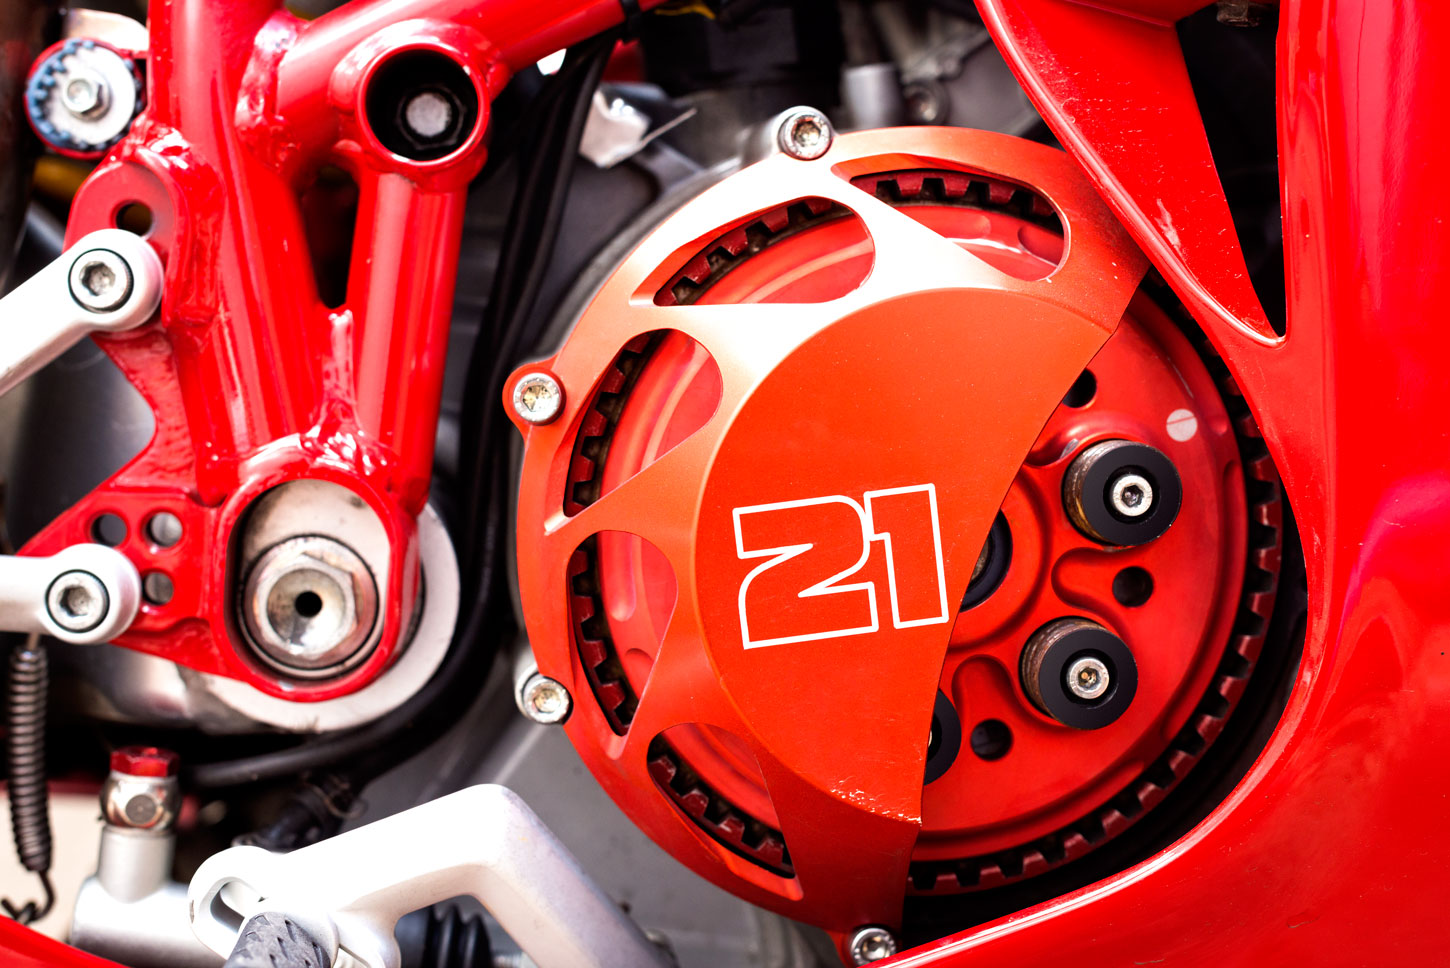 red-sport-motorcycle-details-close-up-2021-08-26-17-12-31-utc.jpg